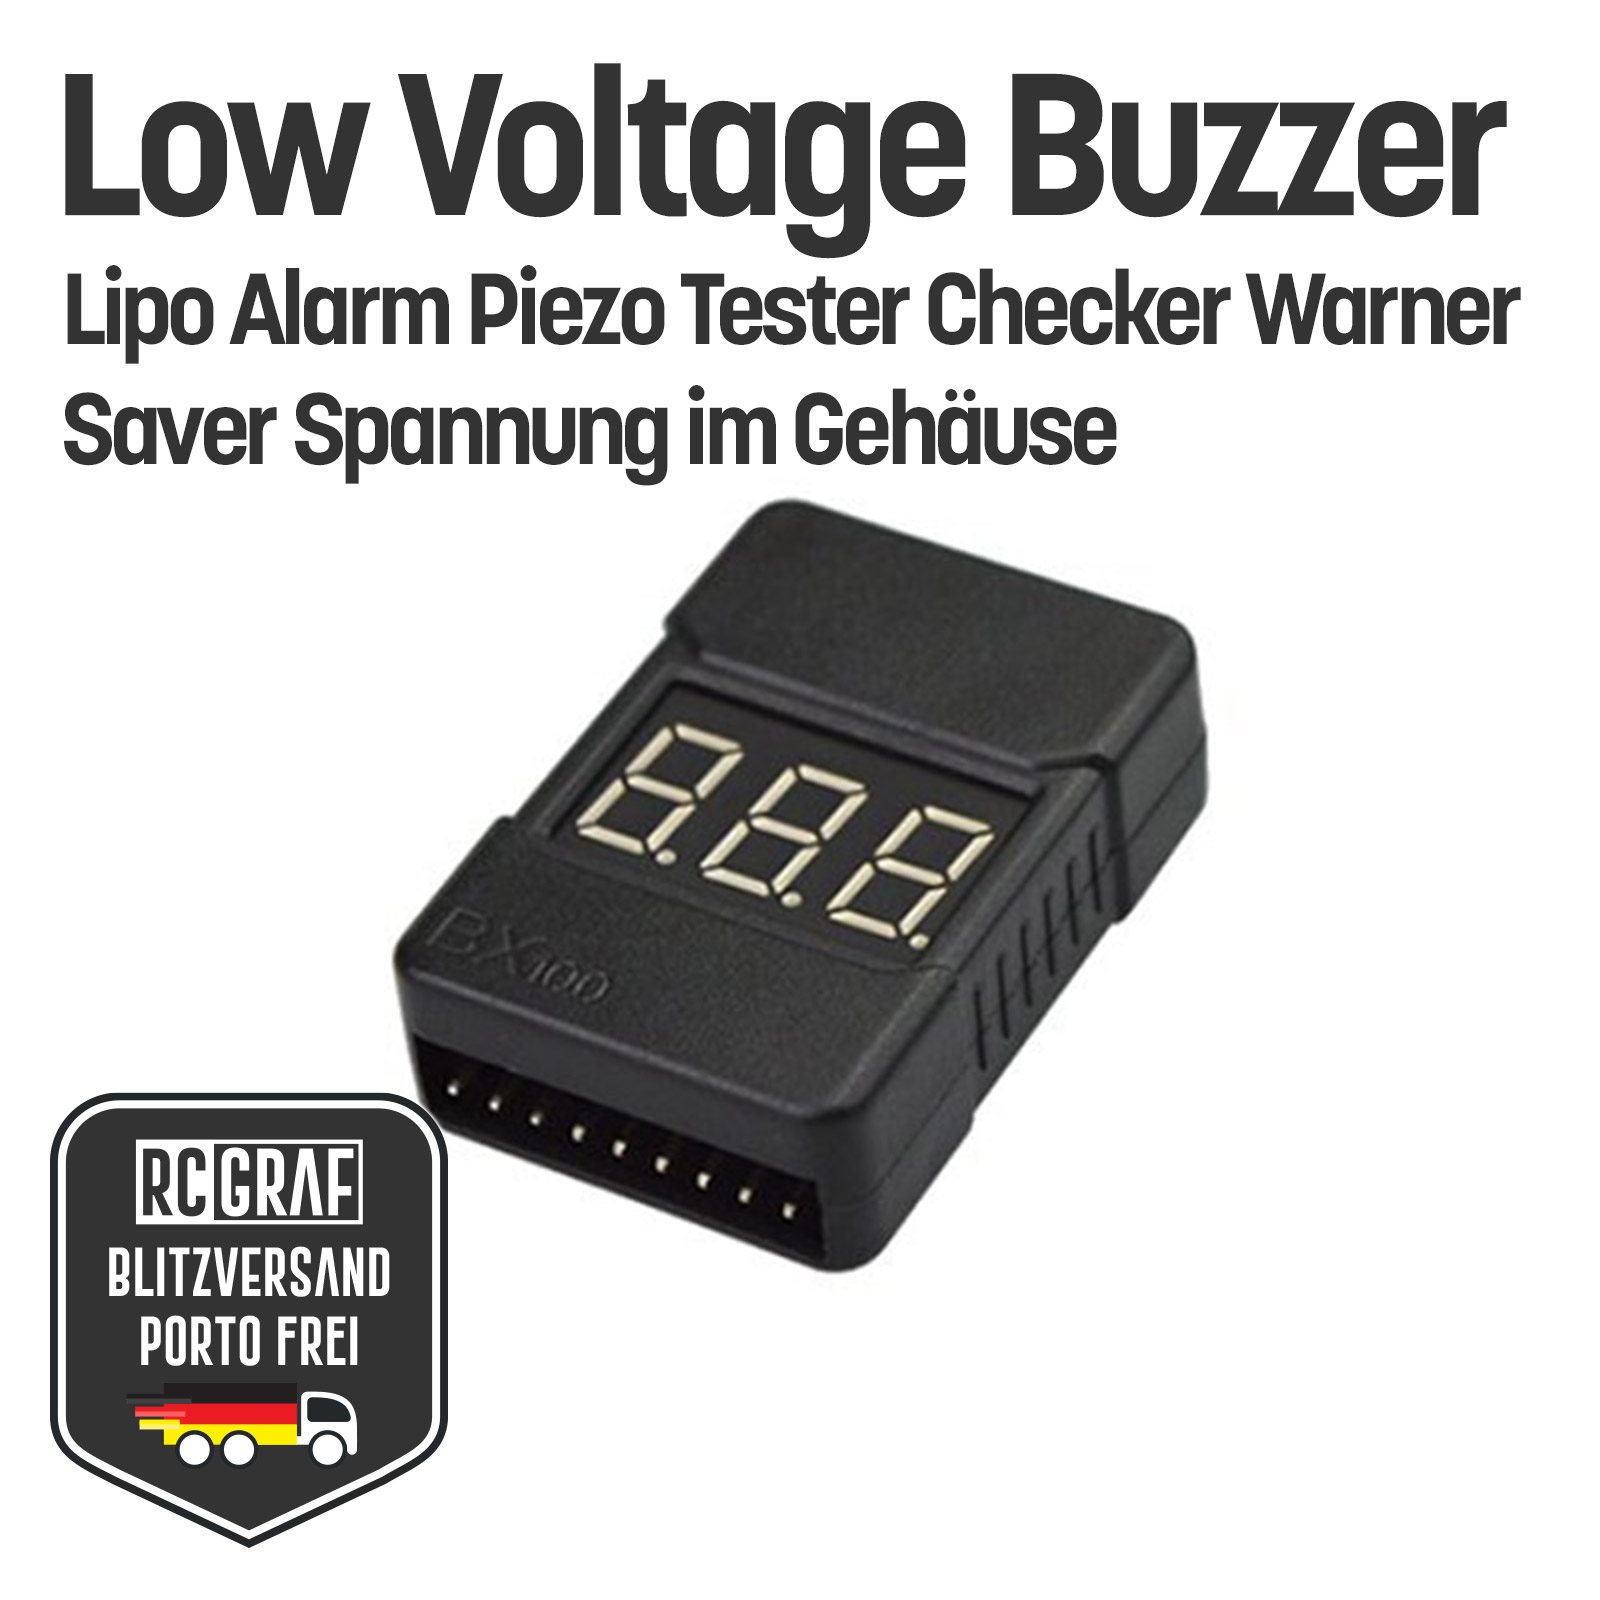 Low Voltage Buzzer Lipo Alarm Piezo Tester Checker Warner Saver Spannung Gehäuse 4